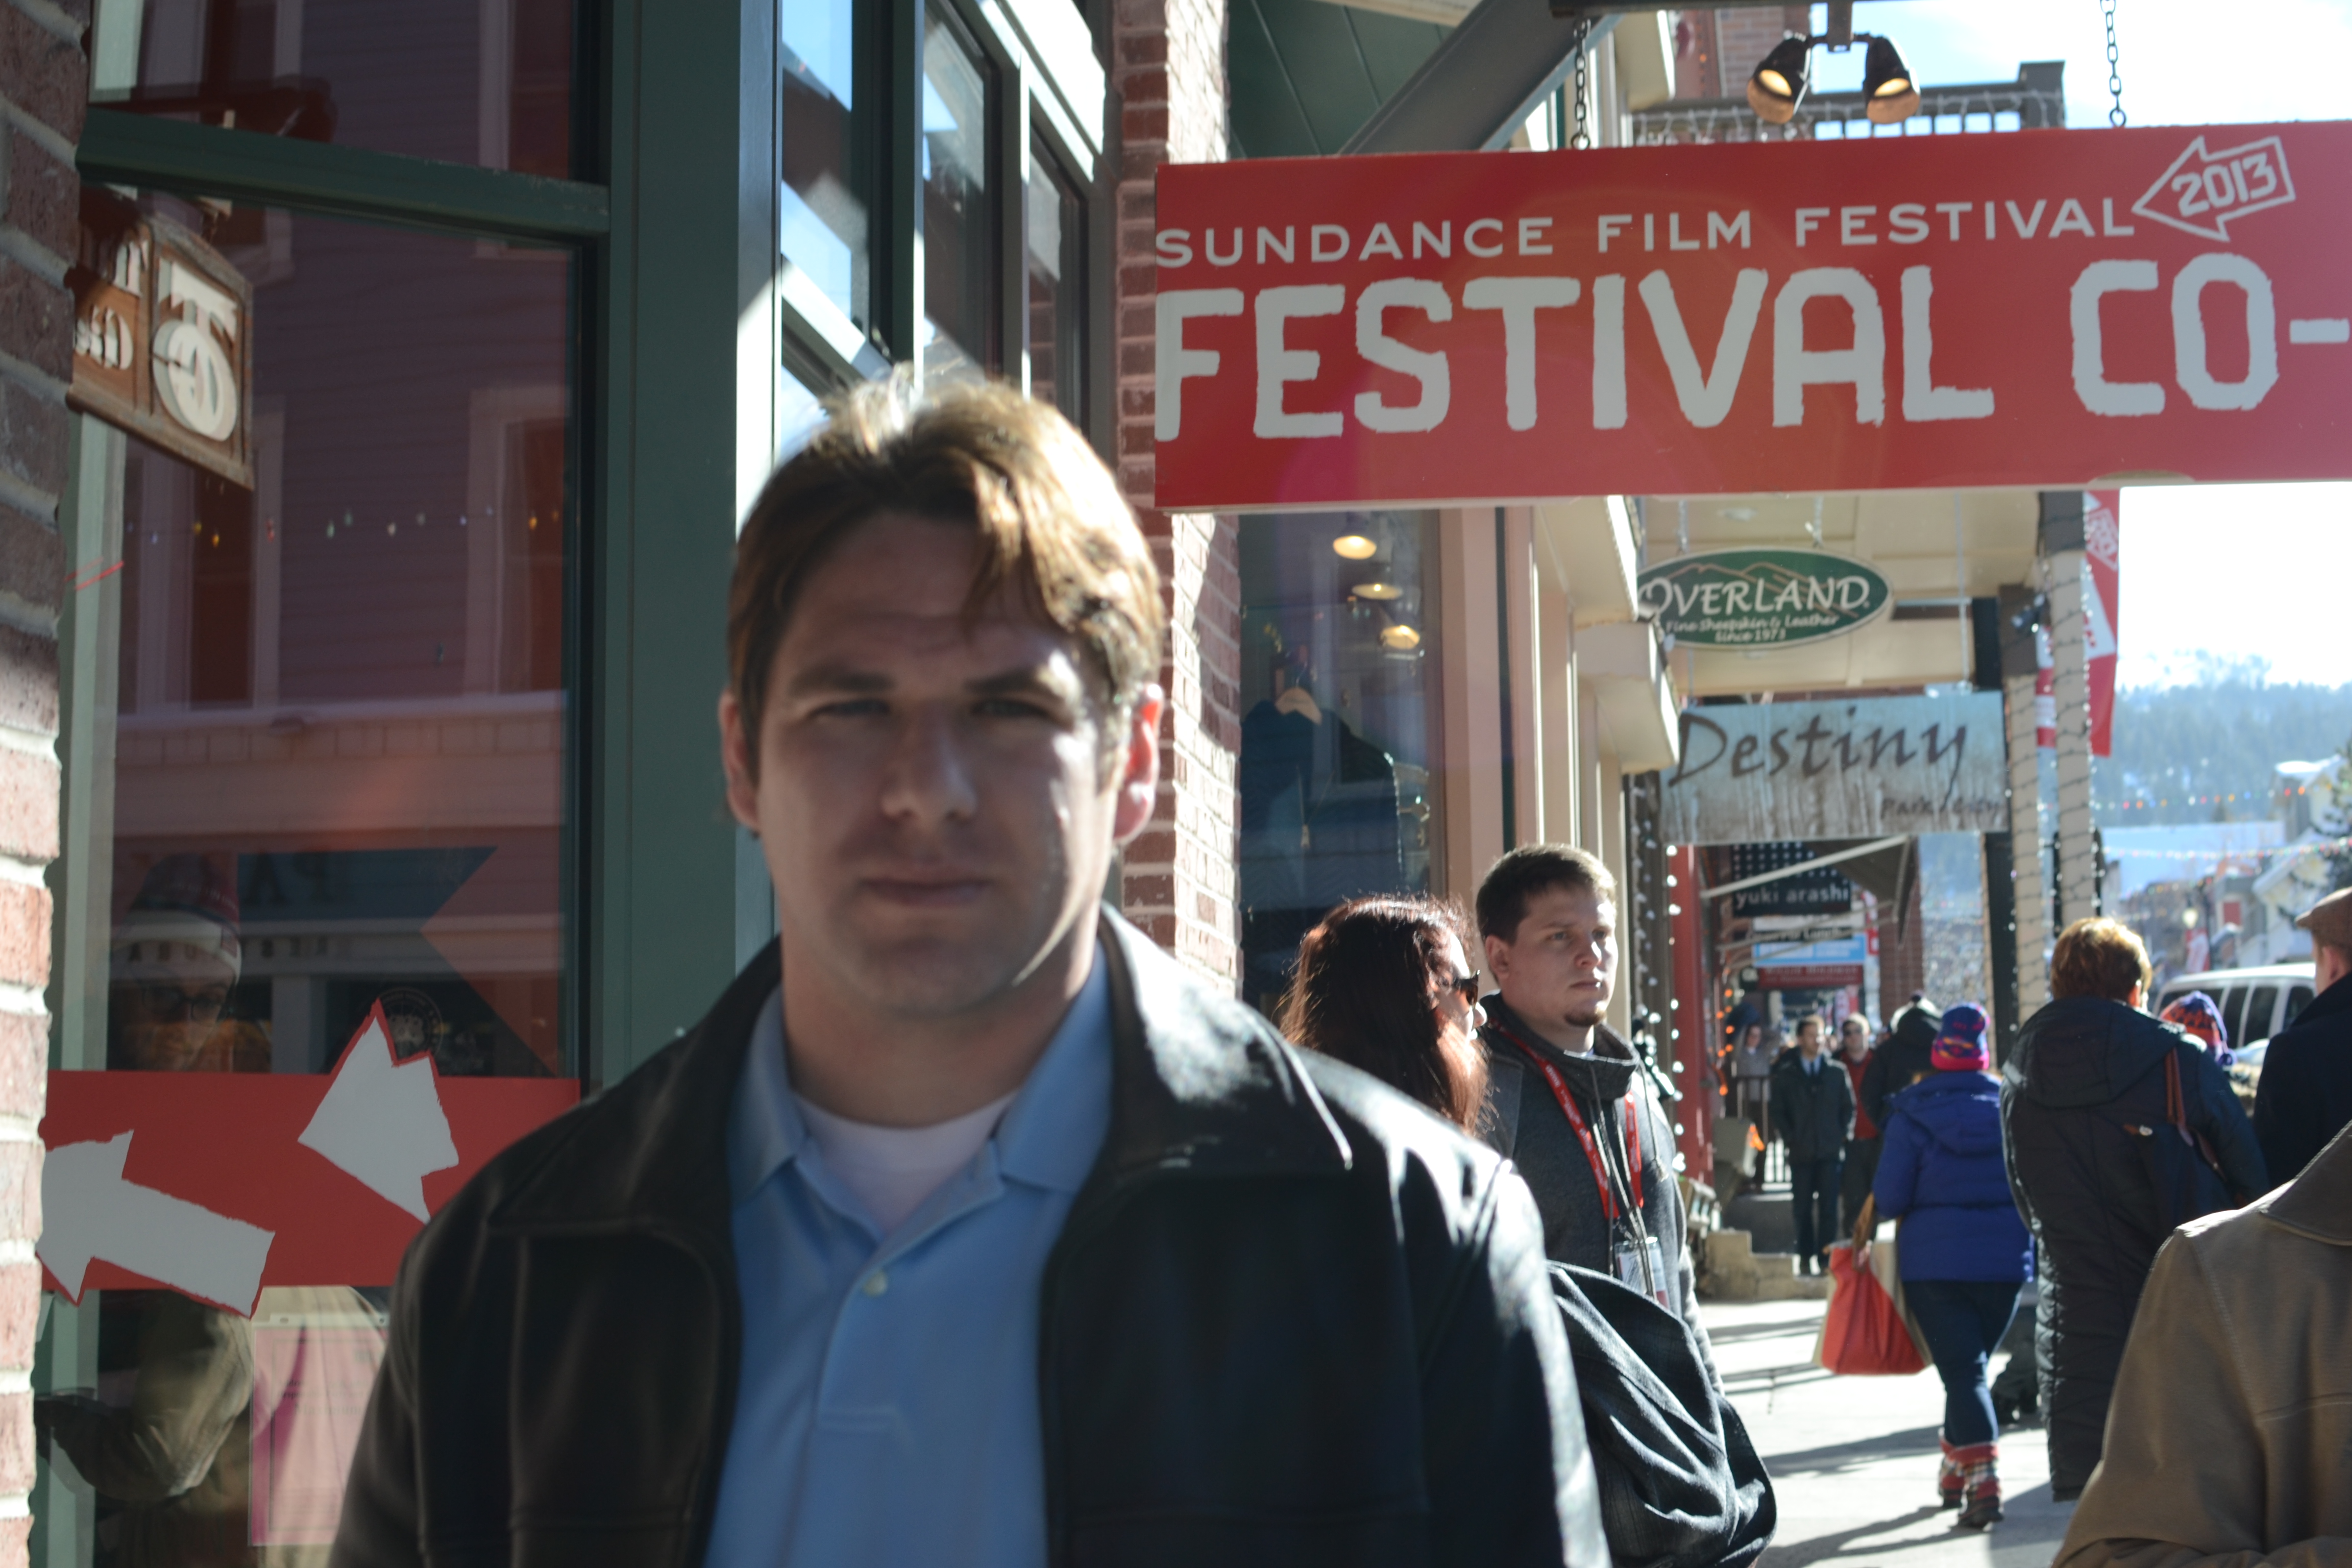 Actor Joseph James at the Sundance Film Festival